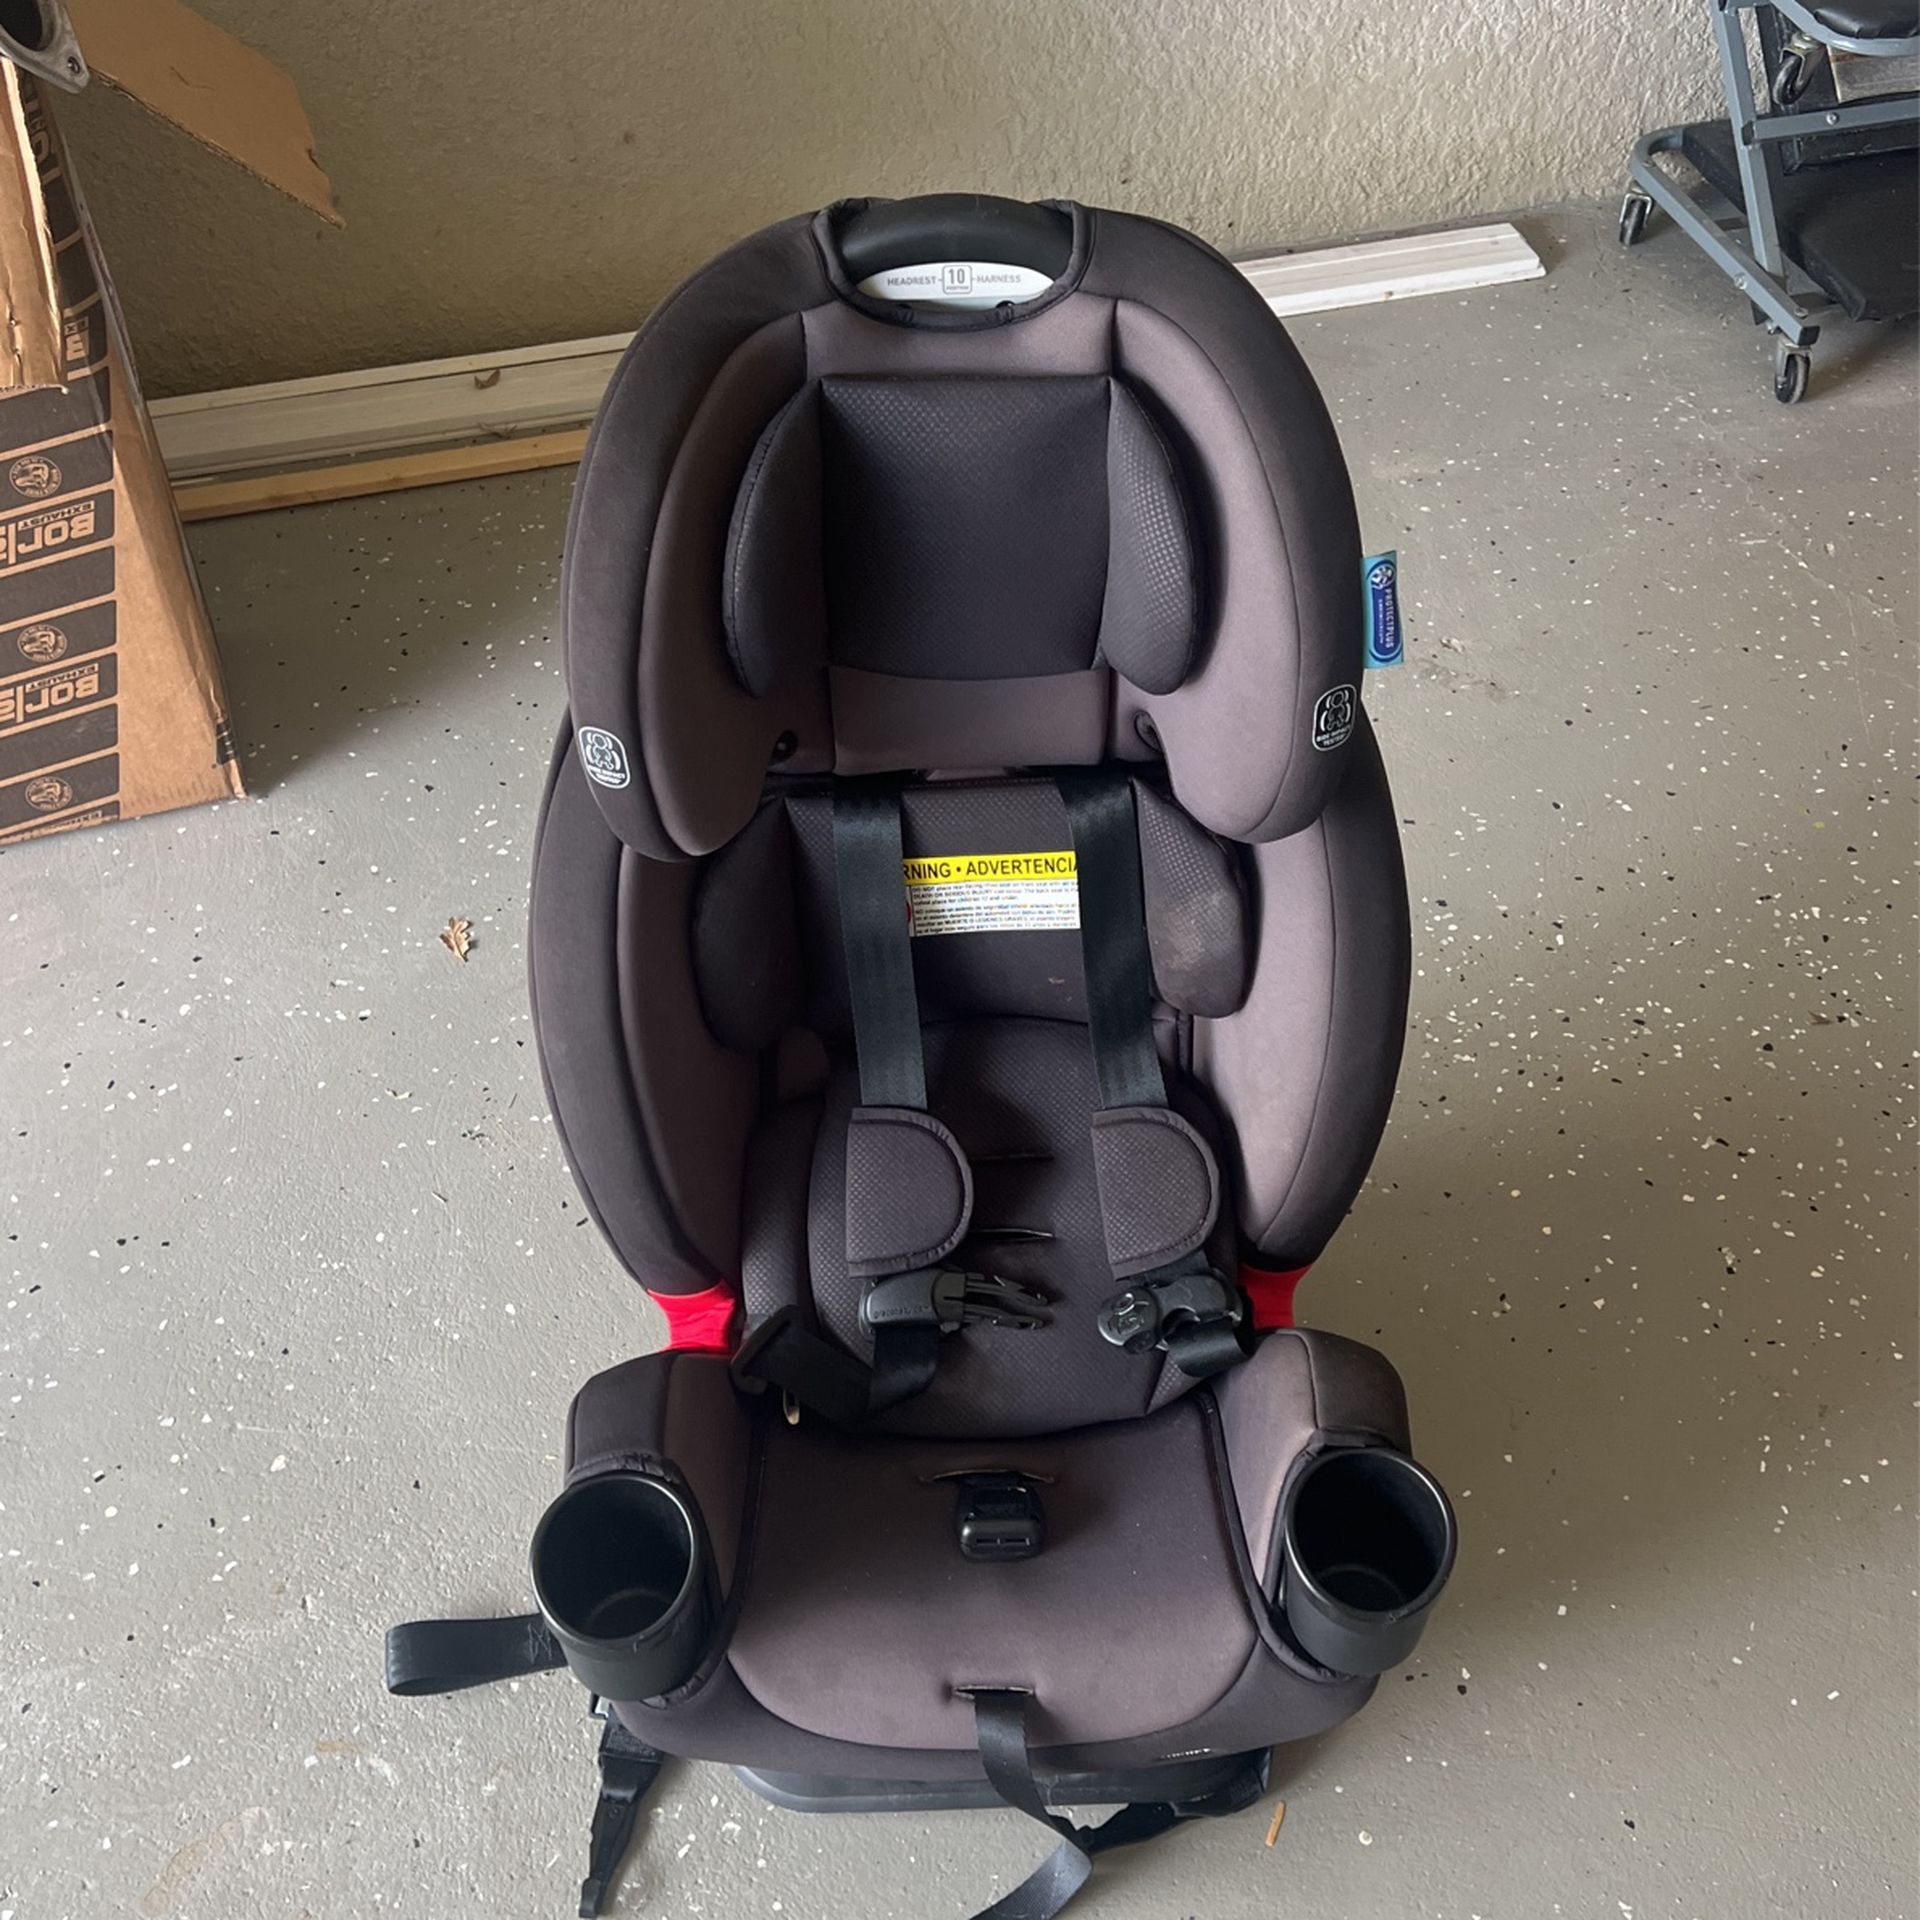 Graco Protect Plus Infant Car Seat.